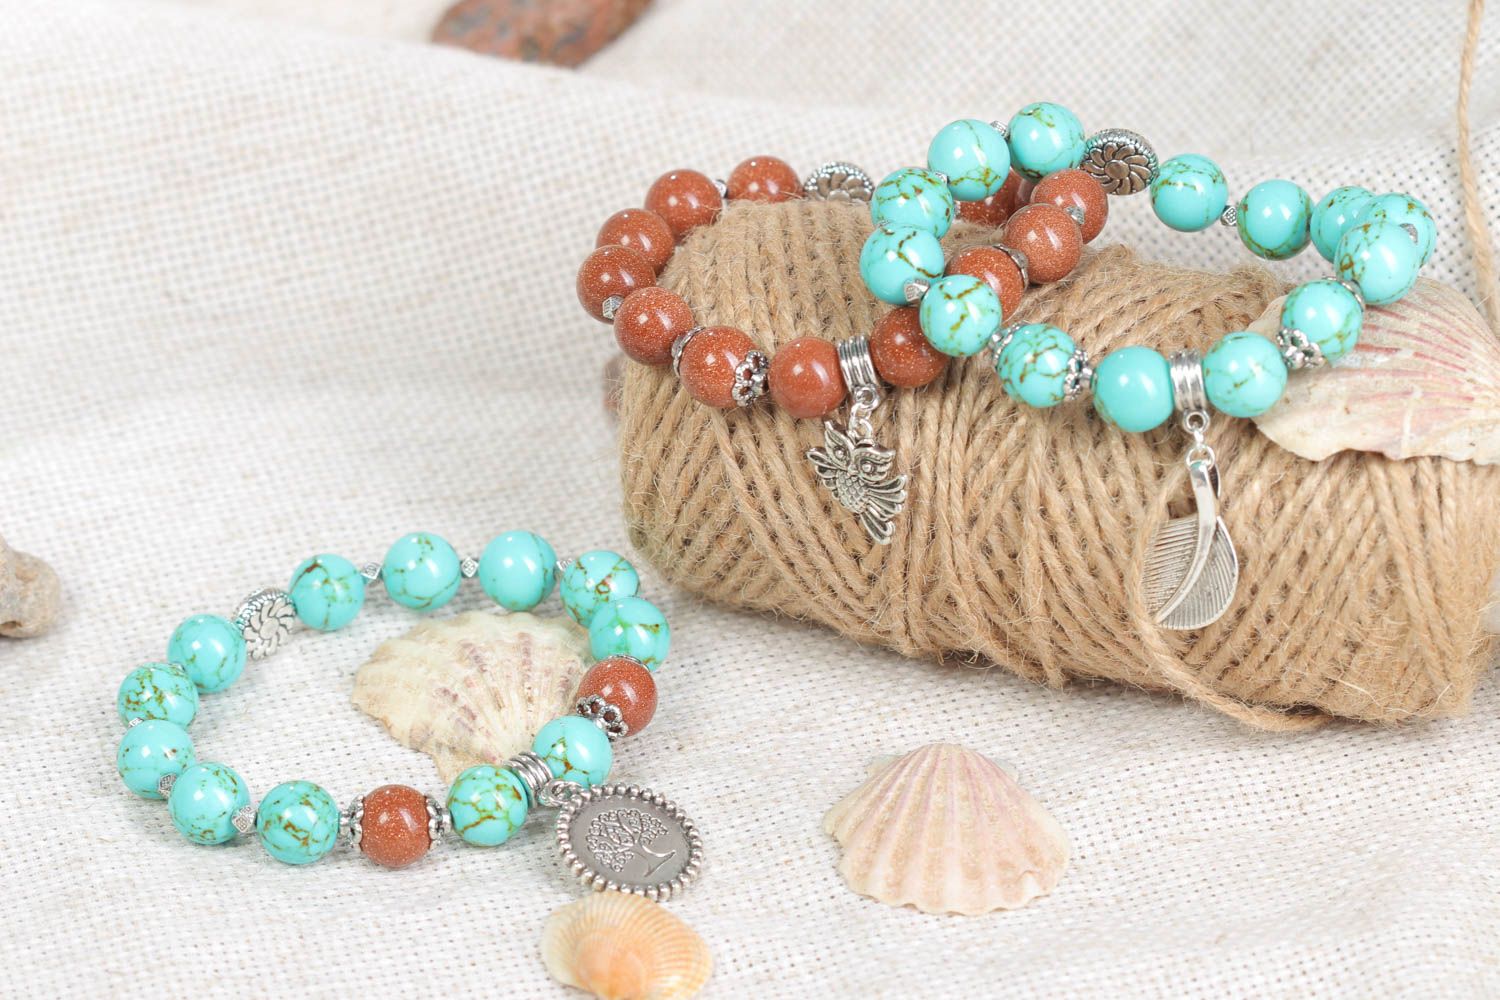 Handmade bracelets made of natural stones designer accessories 3 pieces photo 1